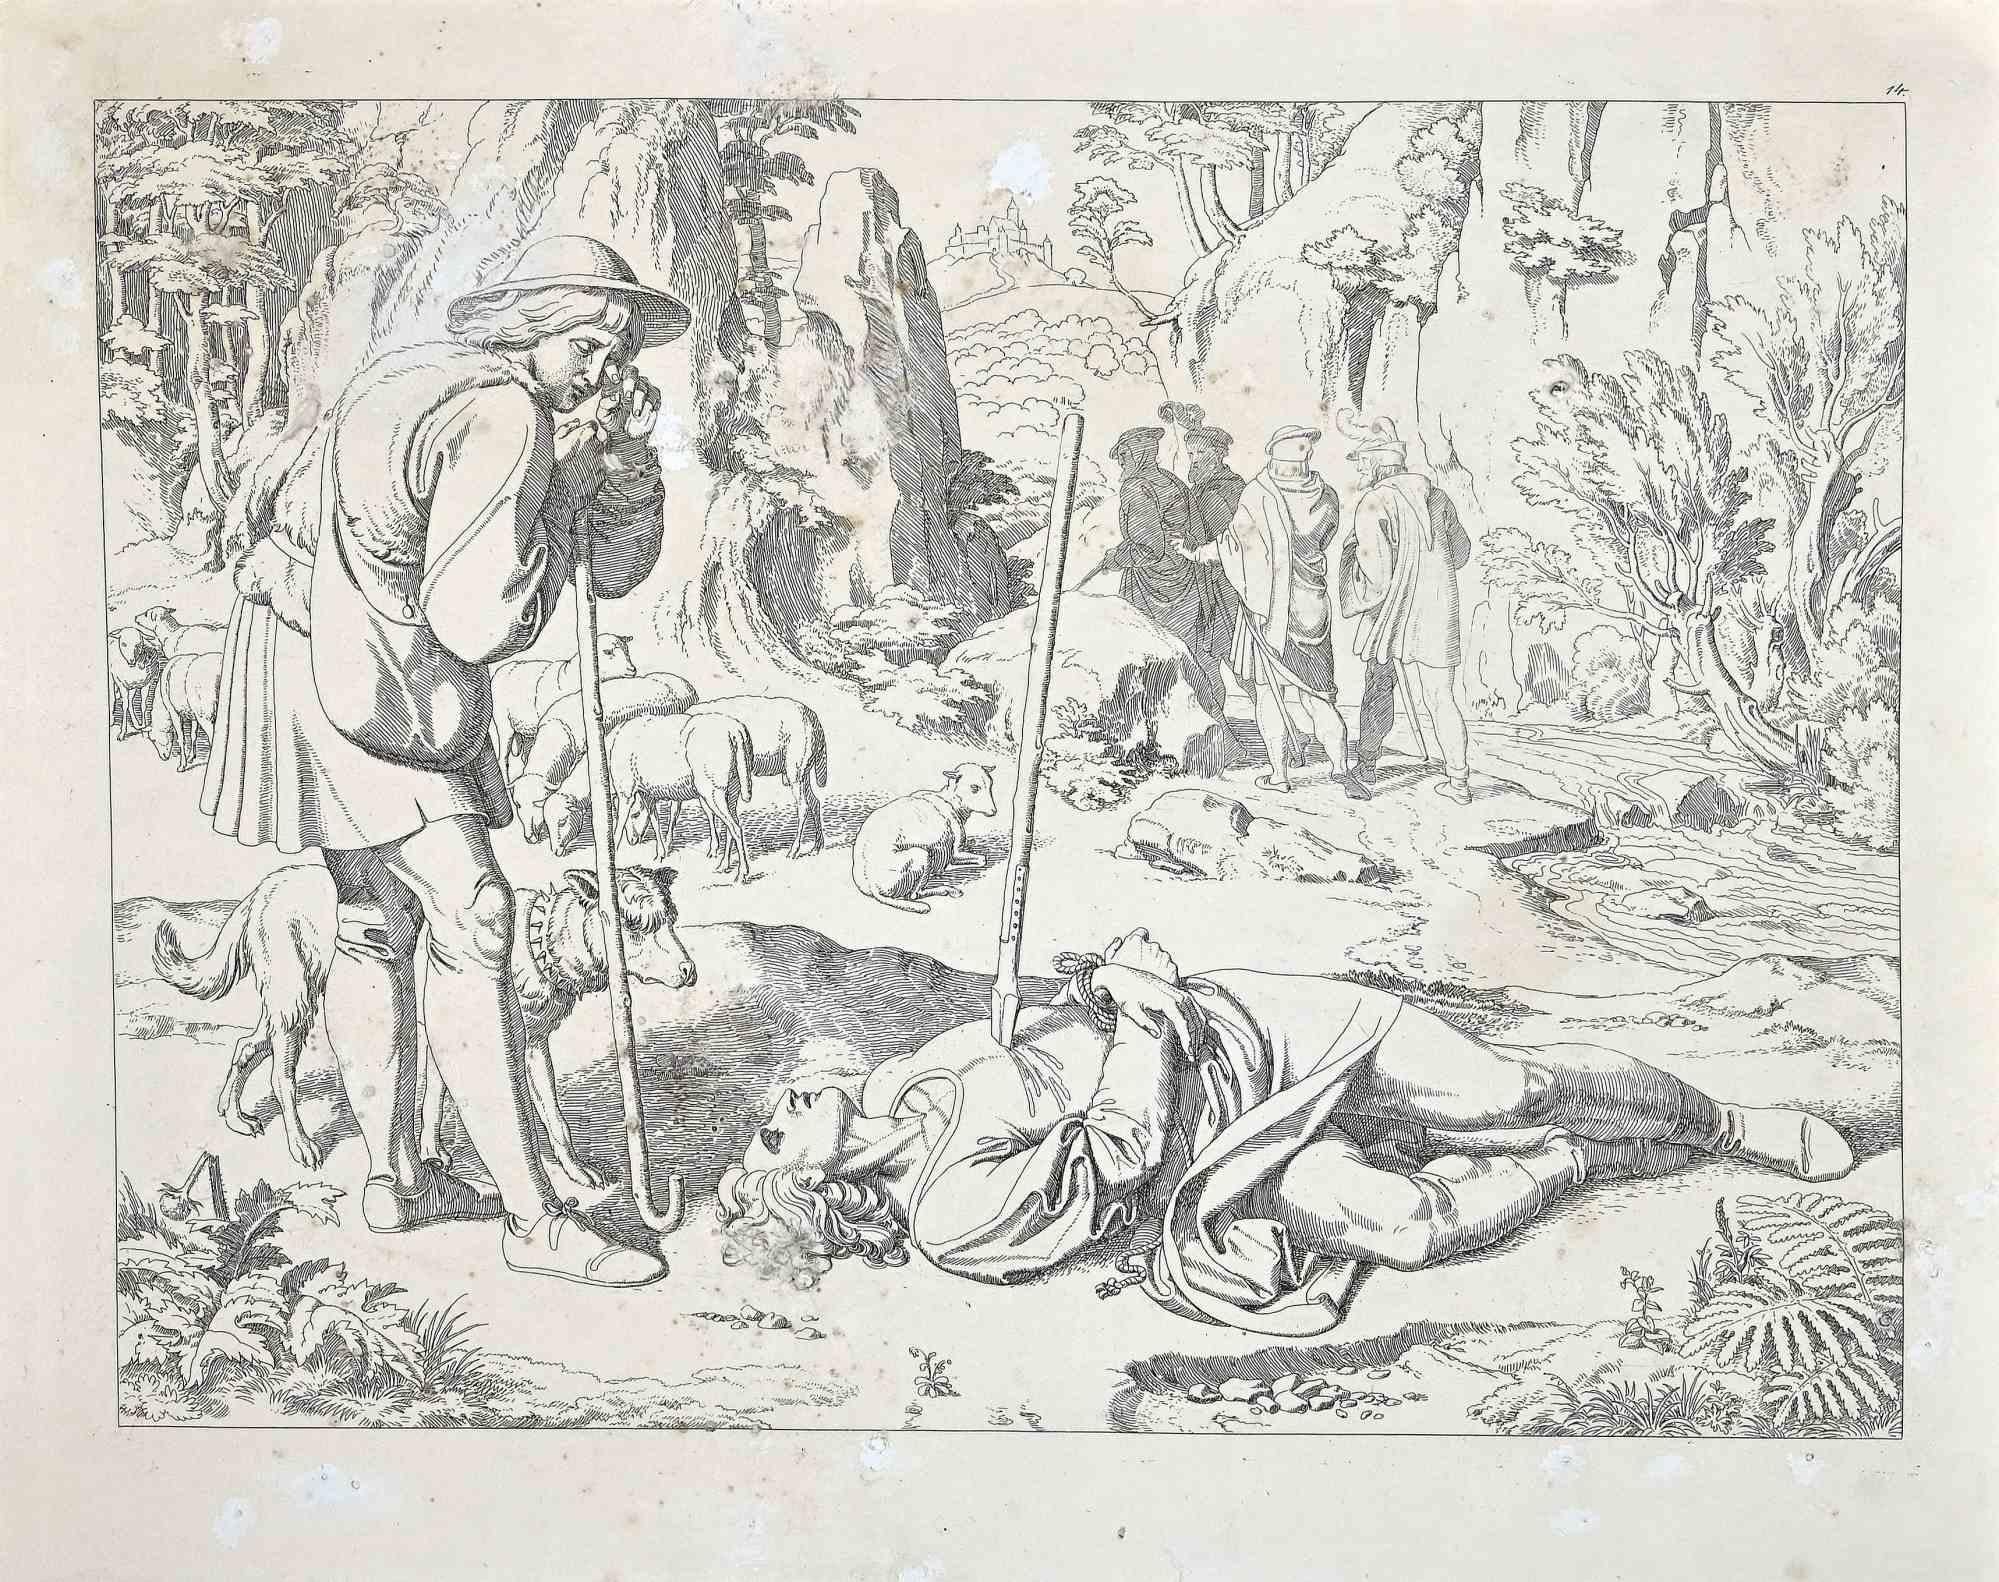 Josef Ritter von Führich Figurative Print - Scene from The Life and Death of Saint Genoveva - Original Etching - 1830s